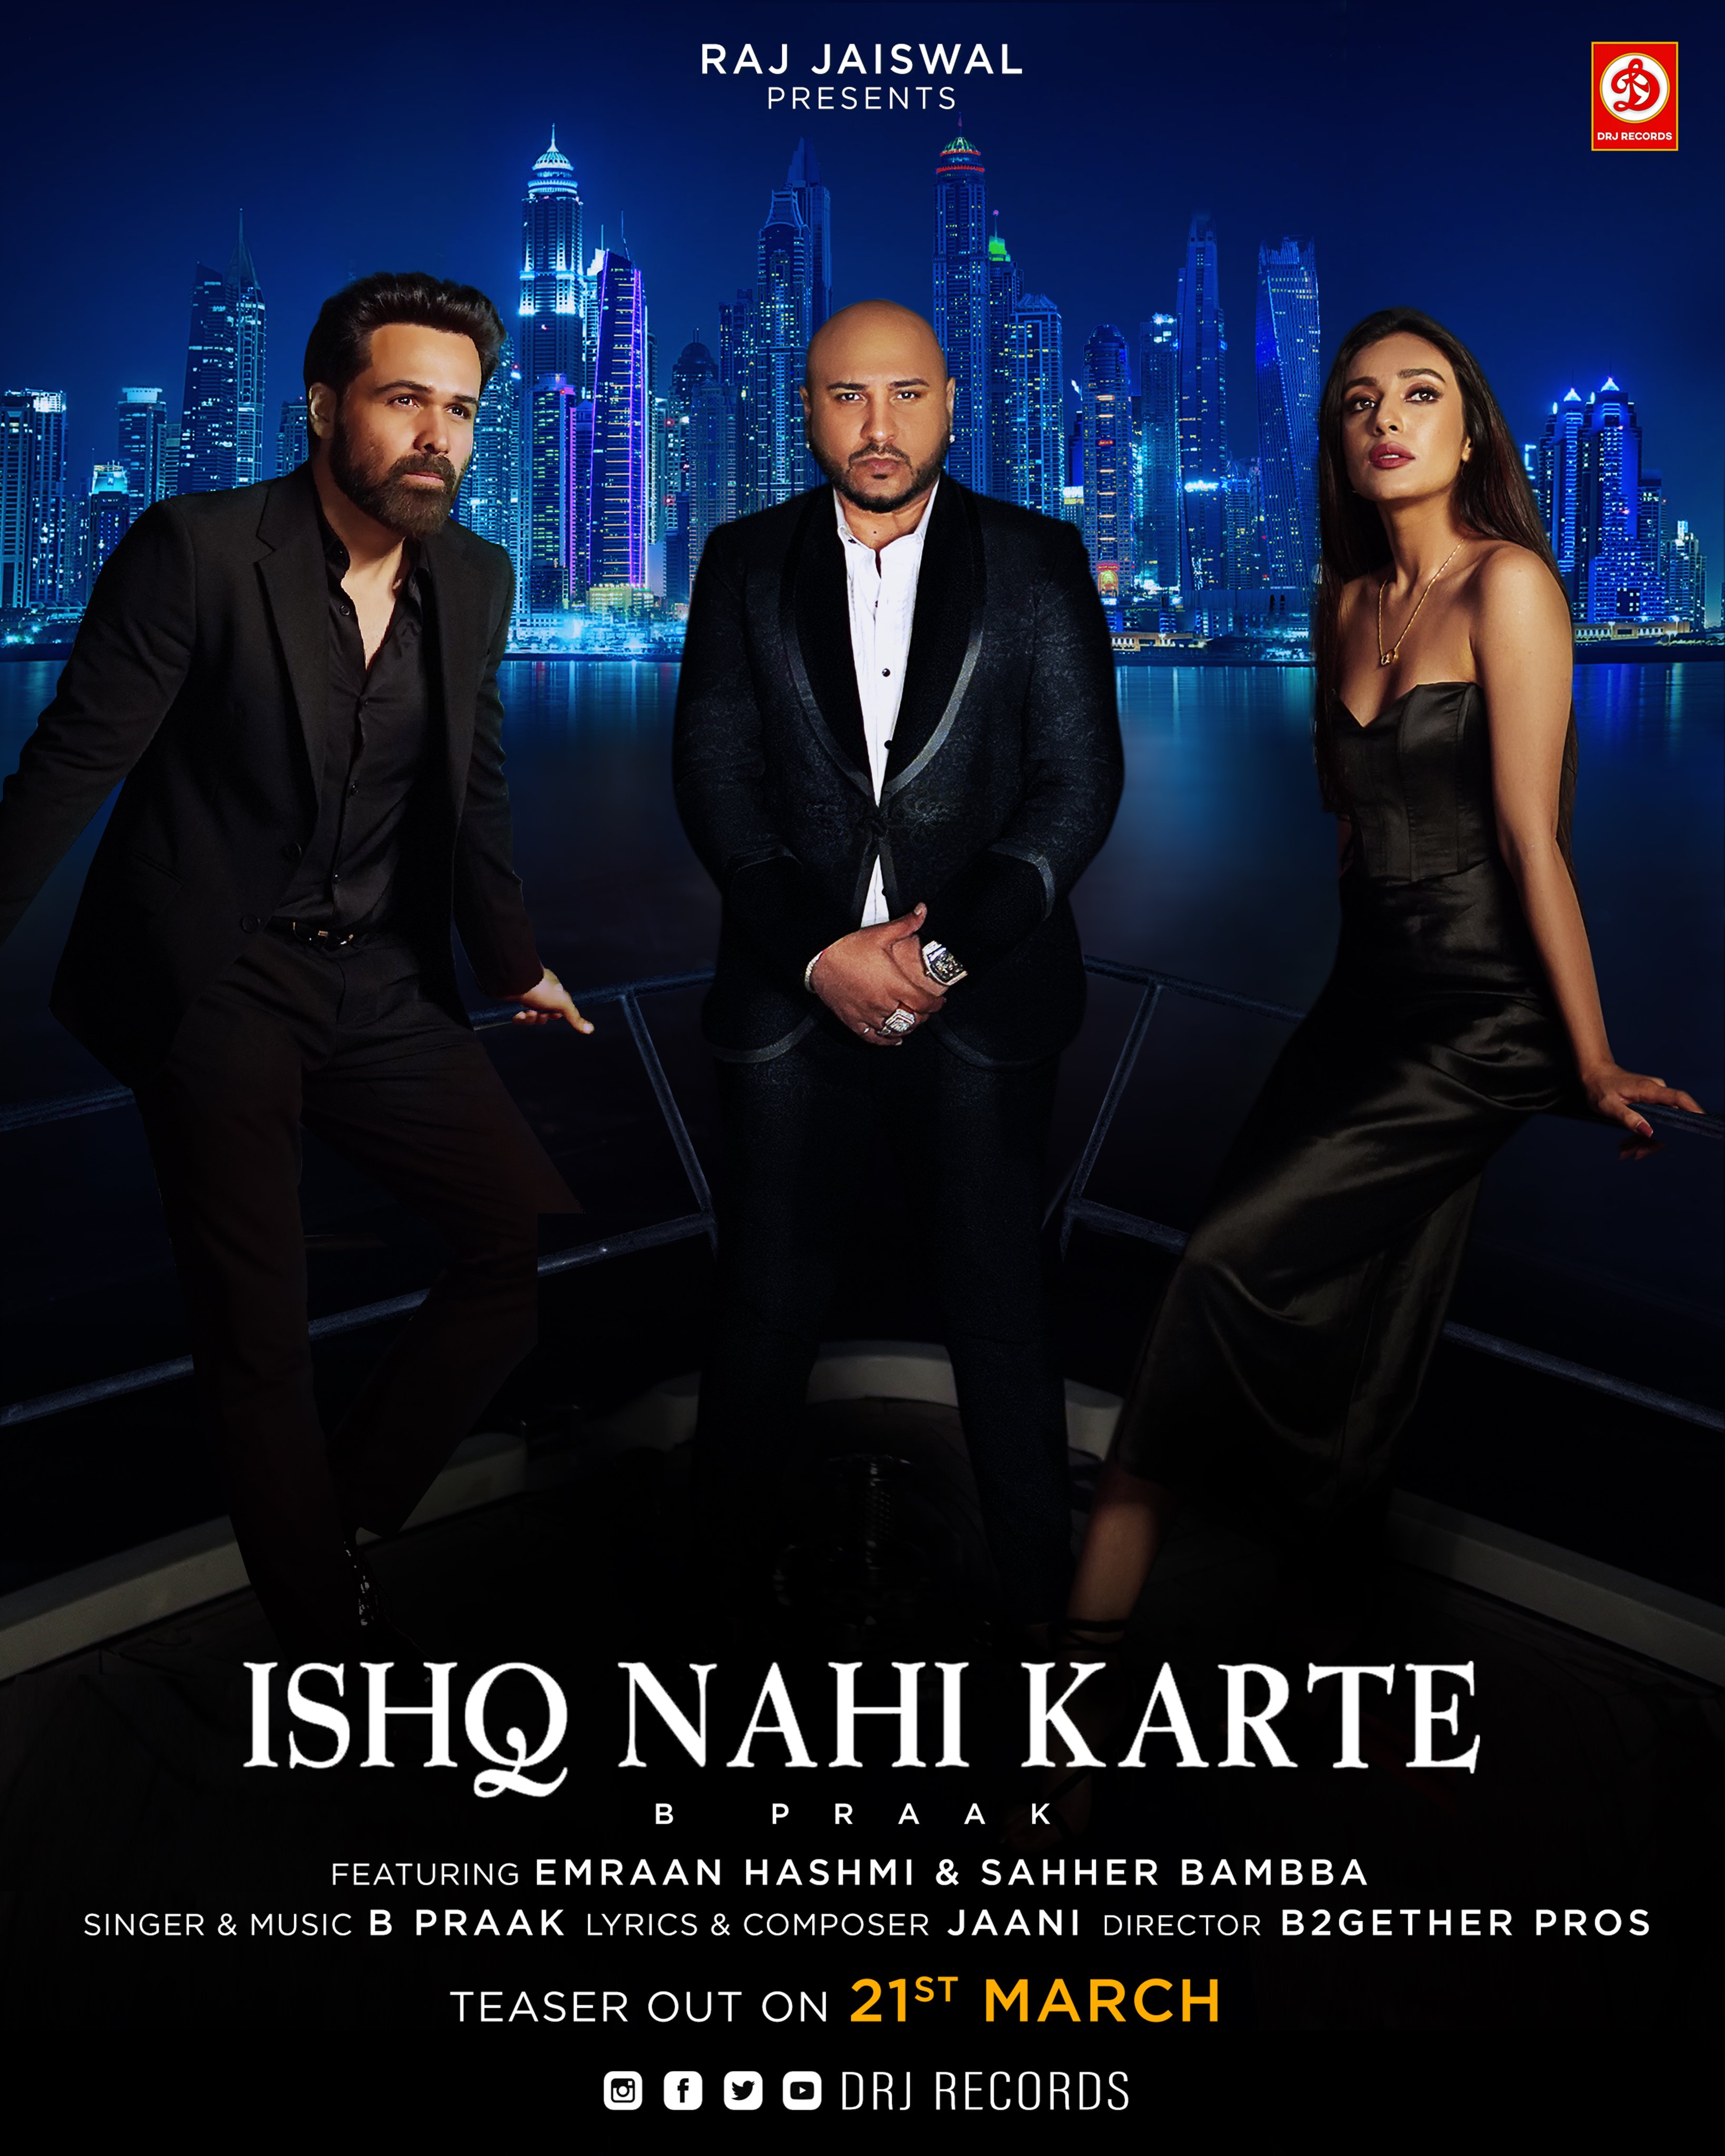 Ishq Nahi Karte Official Music Video By Emraan Hashmi 1080p HDRip Download